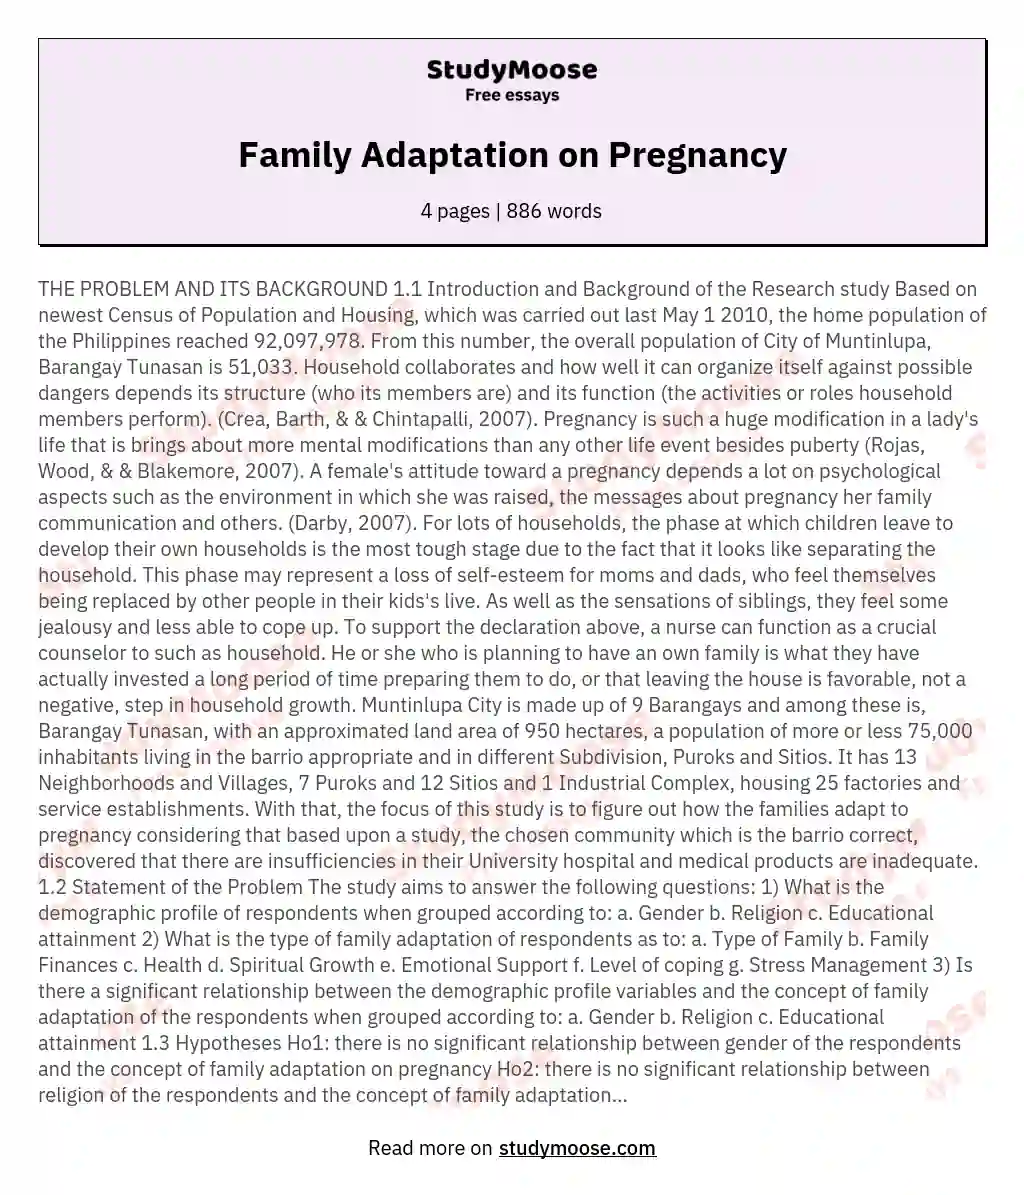 Family Adaptation on Pregnancy essay